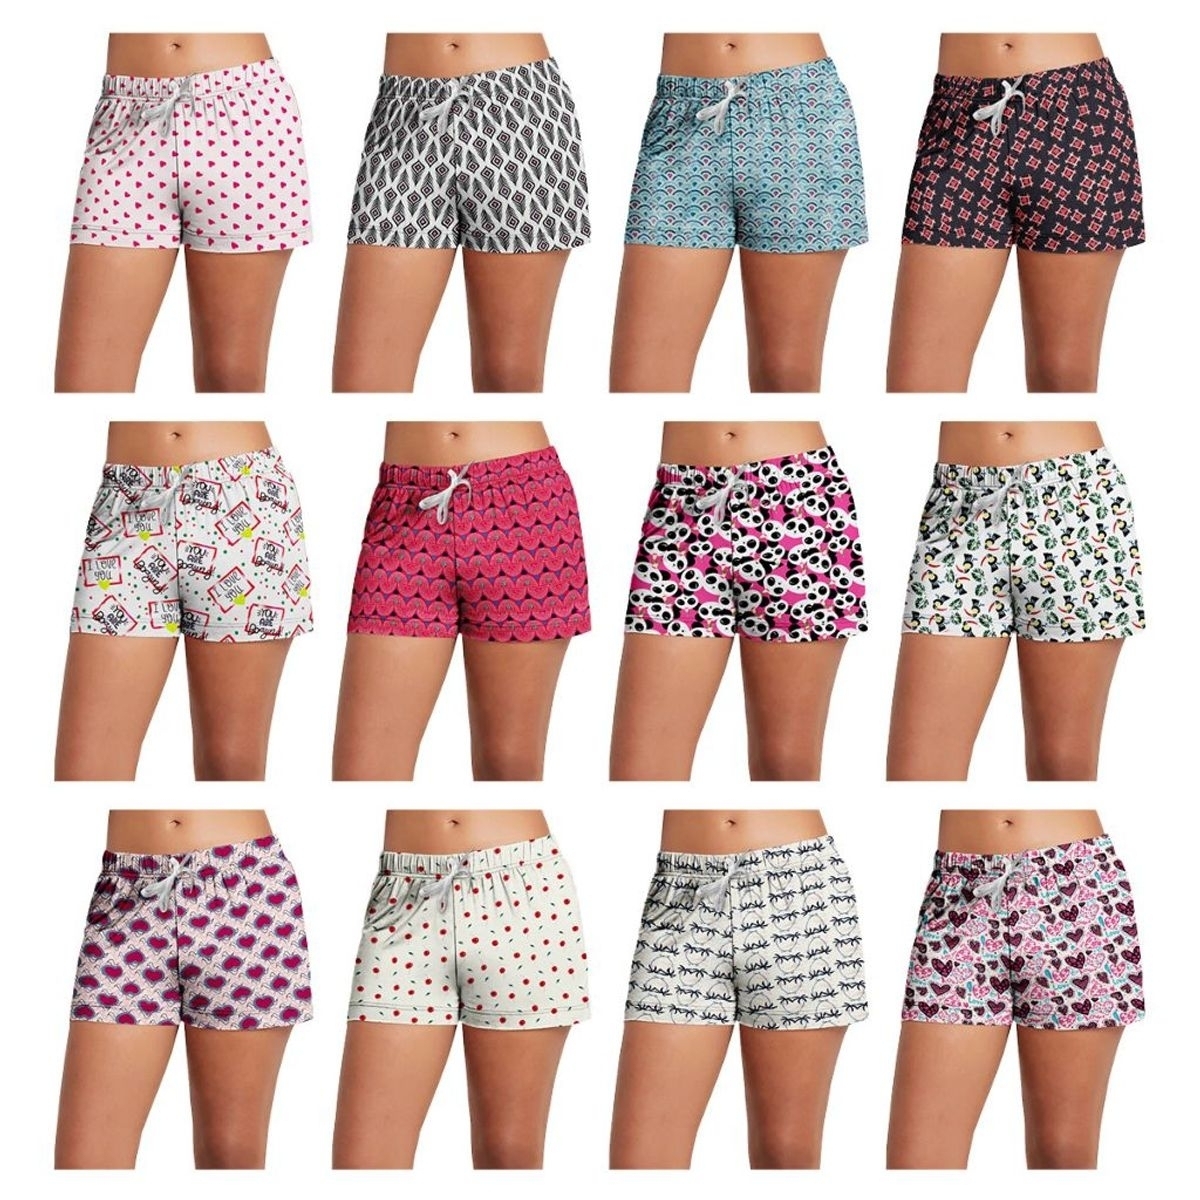 Multi-Pack: Women's Super-Soft Lightweight Fun Printed Comfy Lounge Bottom Pajama Shorts W/ Drawstring - 3-pack, Medium, Shapes